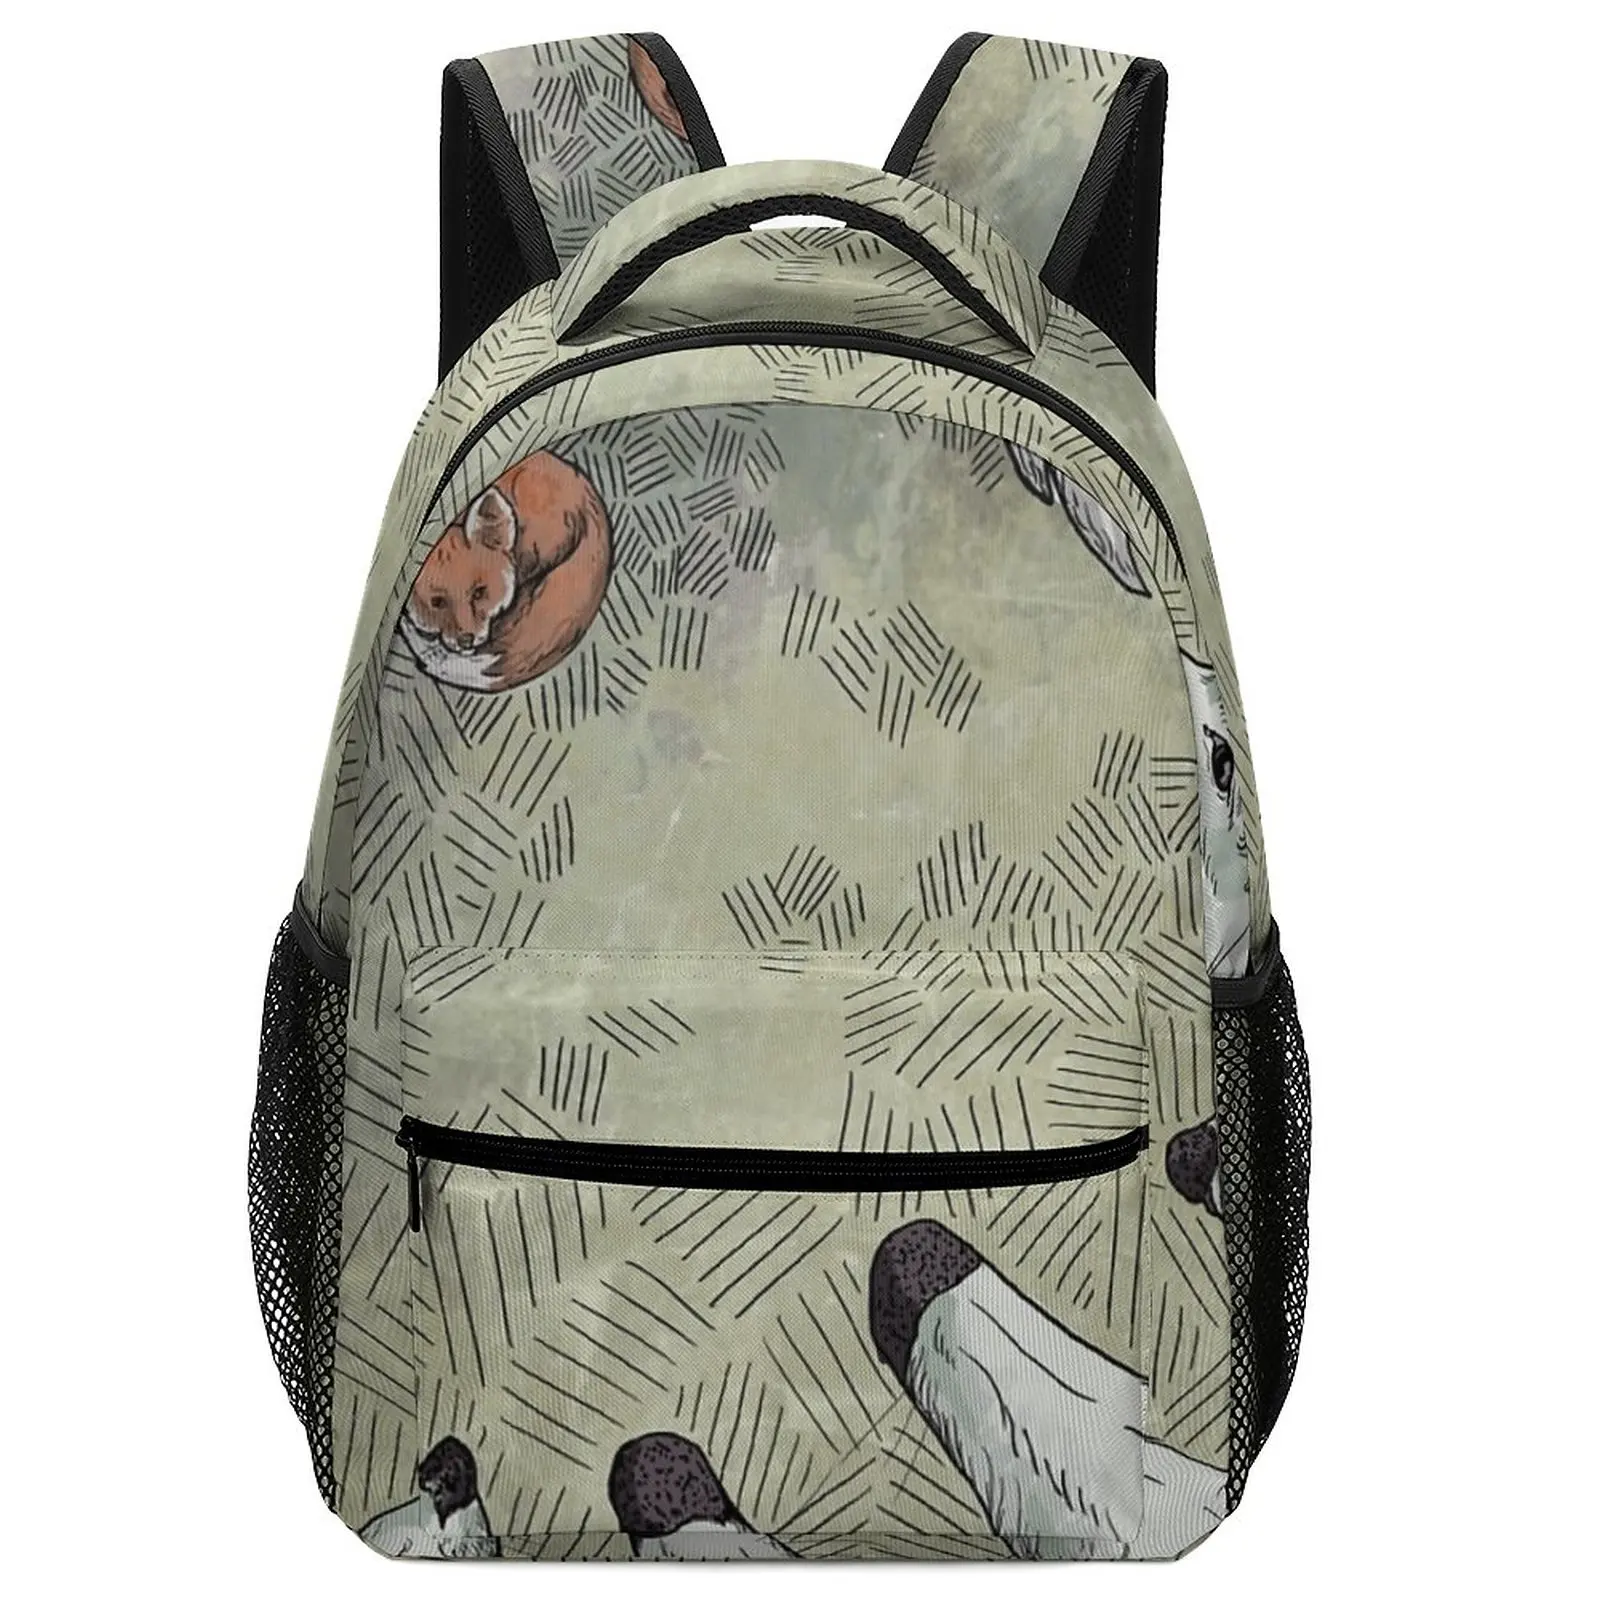 New Fox Hunt Elementary School Girl Backpack for Girls Boys Women Art  School Bags Kawaii Backpack For Girls Elementary Sc